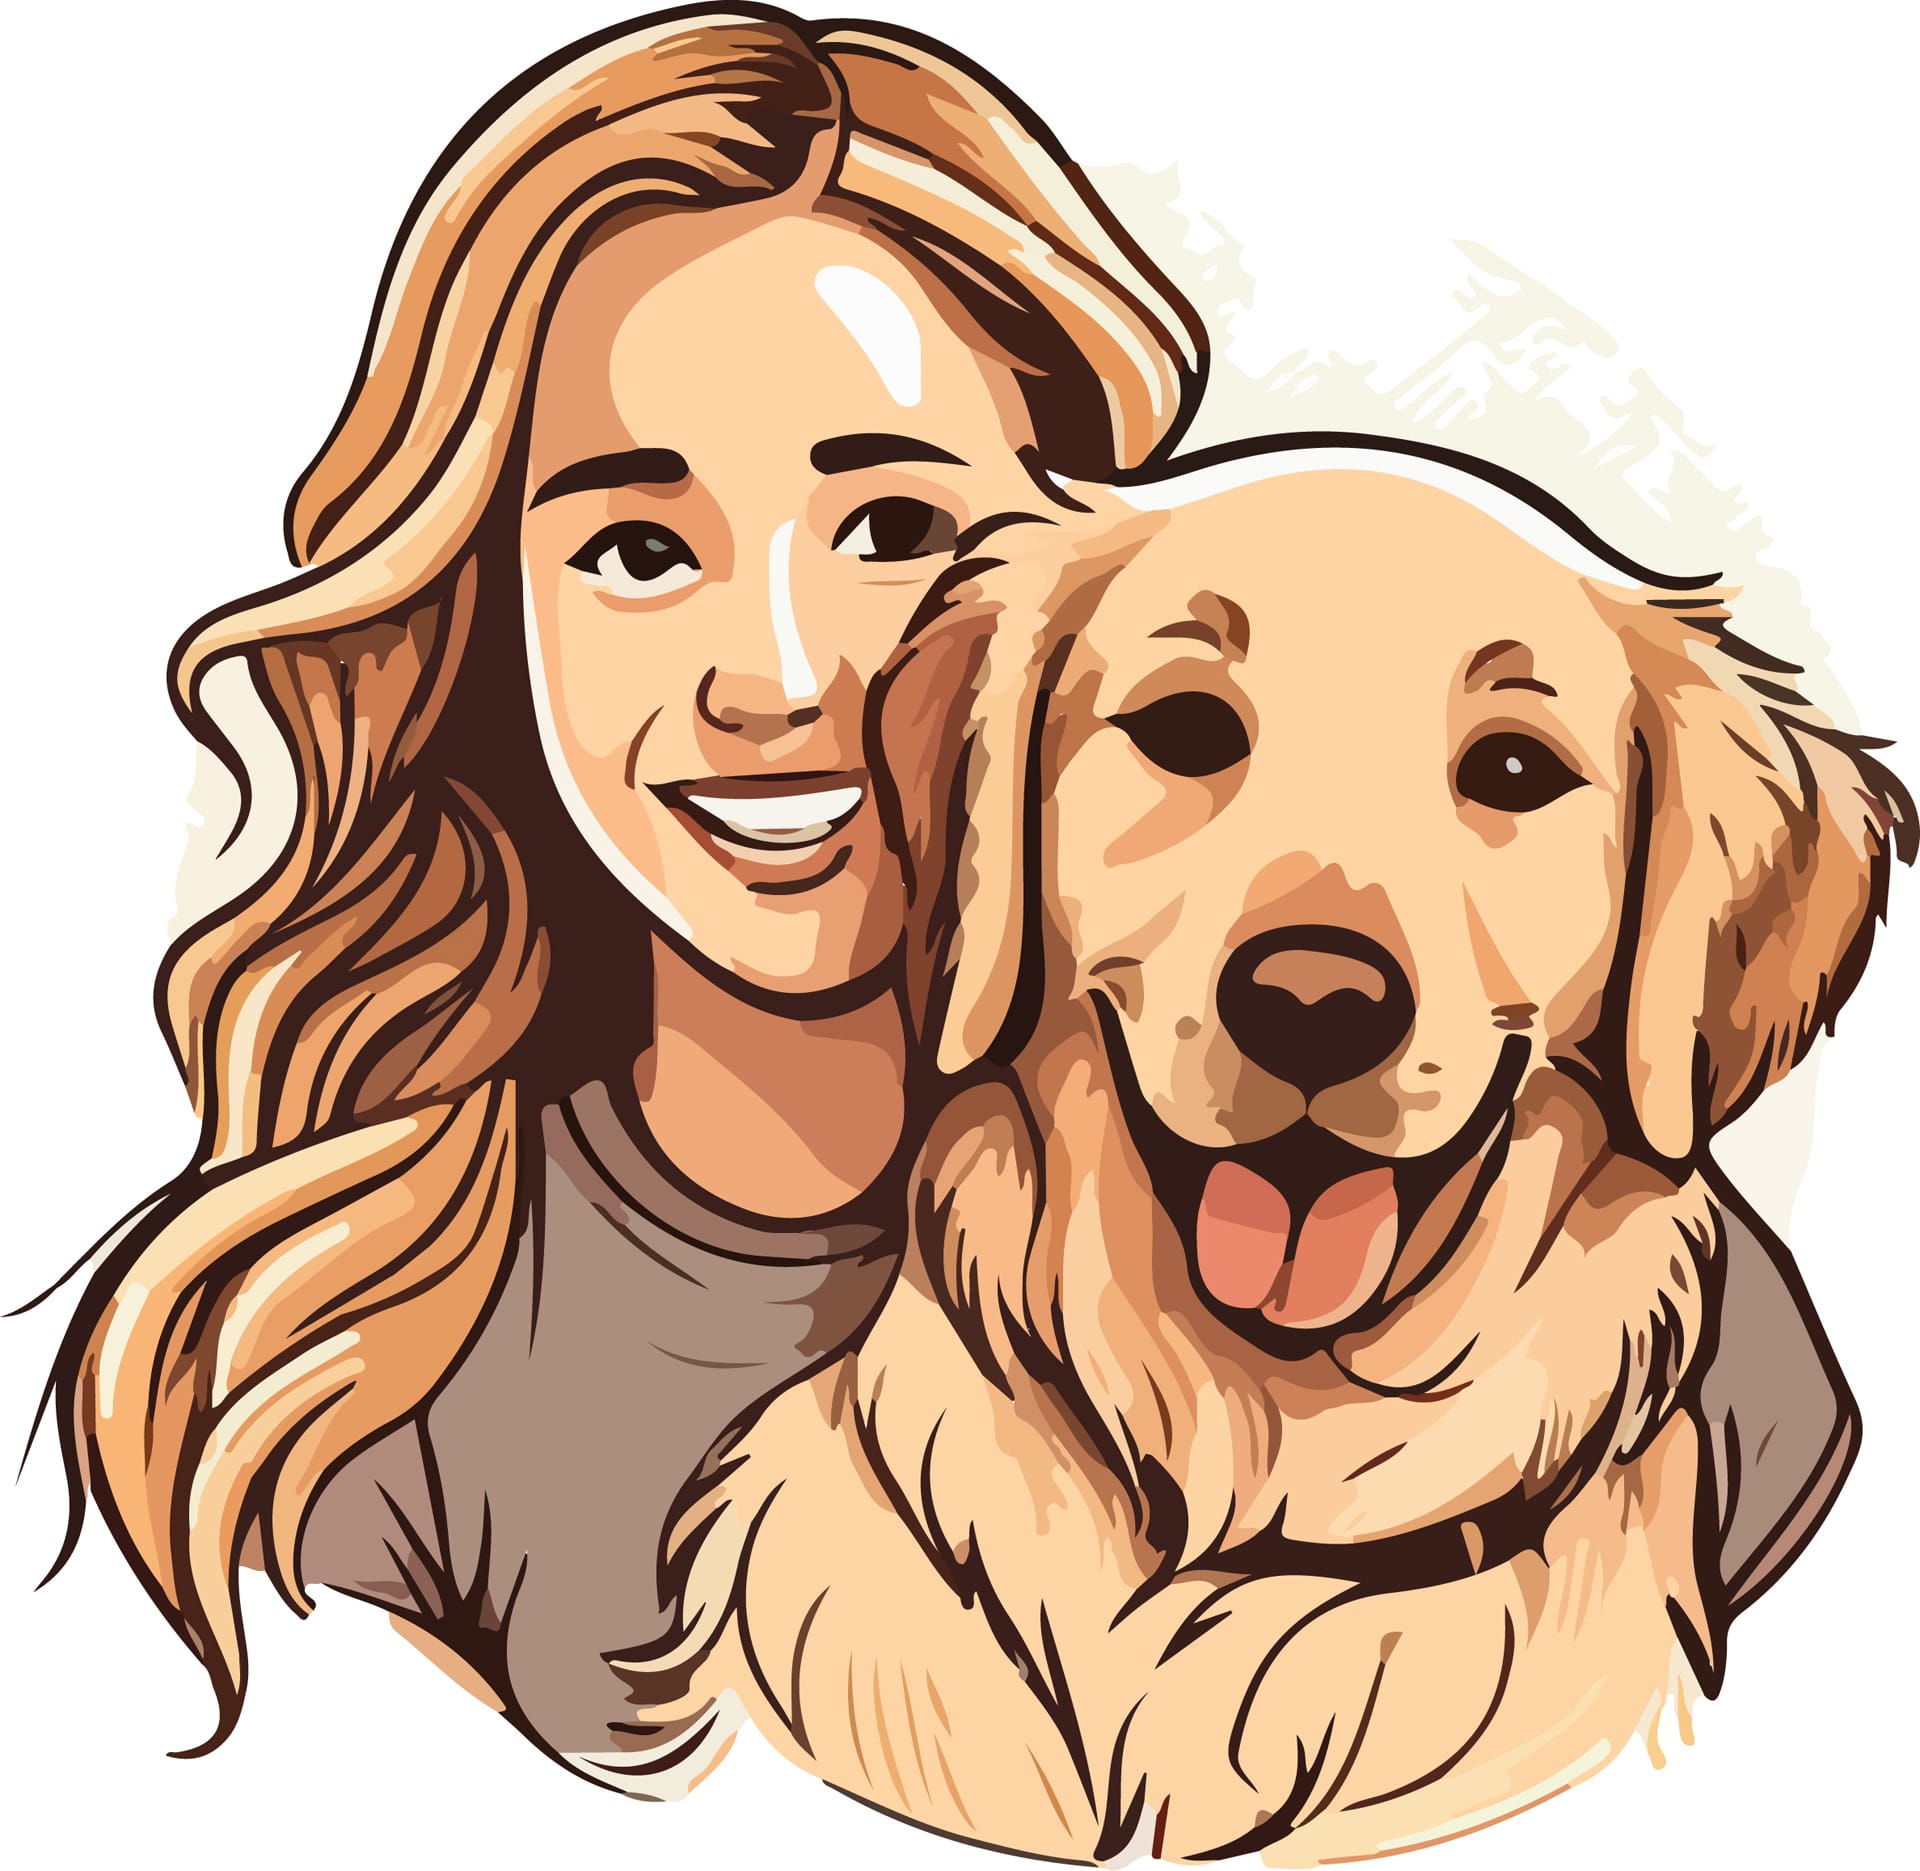 Cute dog mom illustration nice image